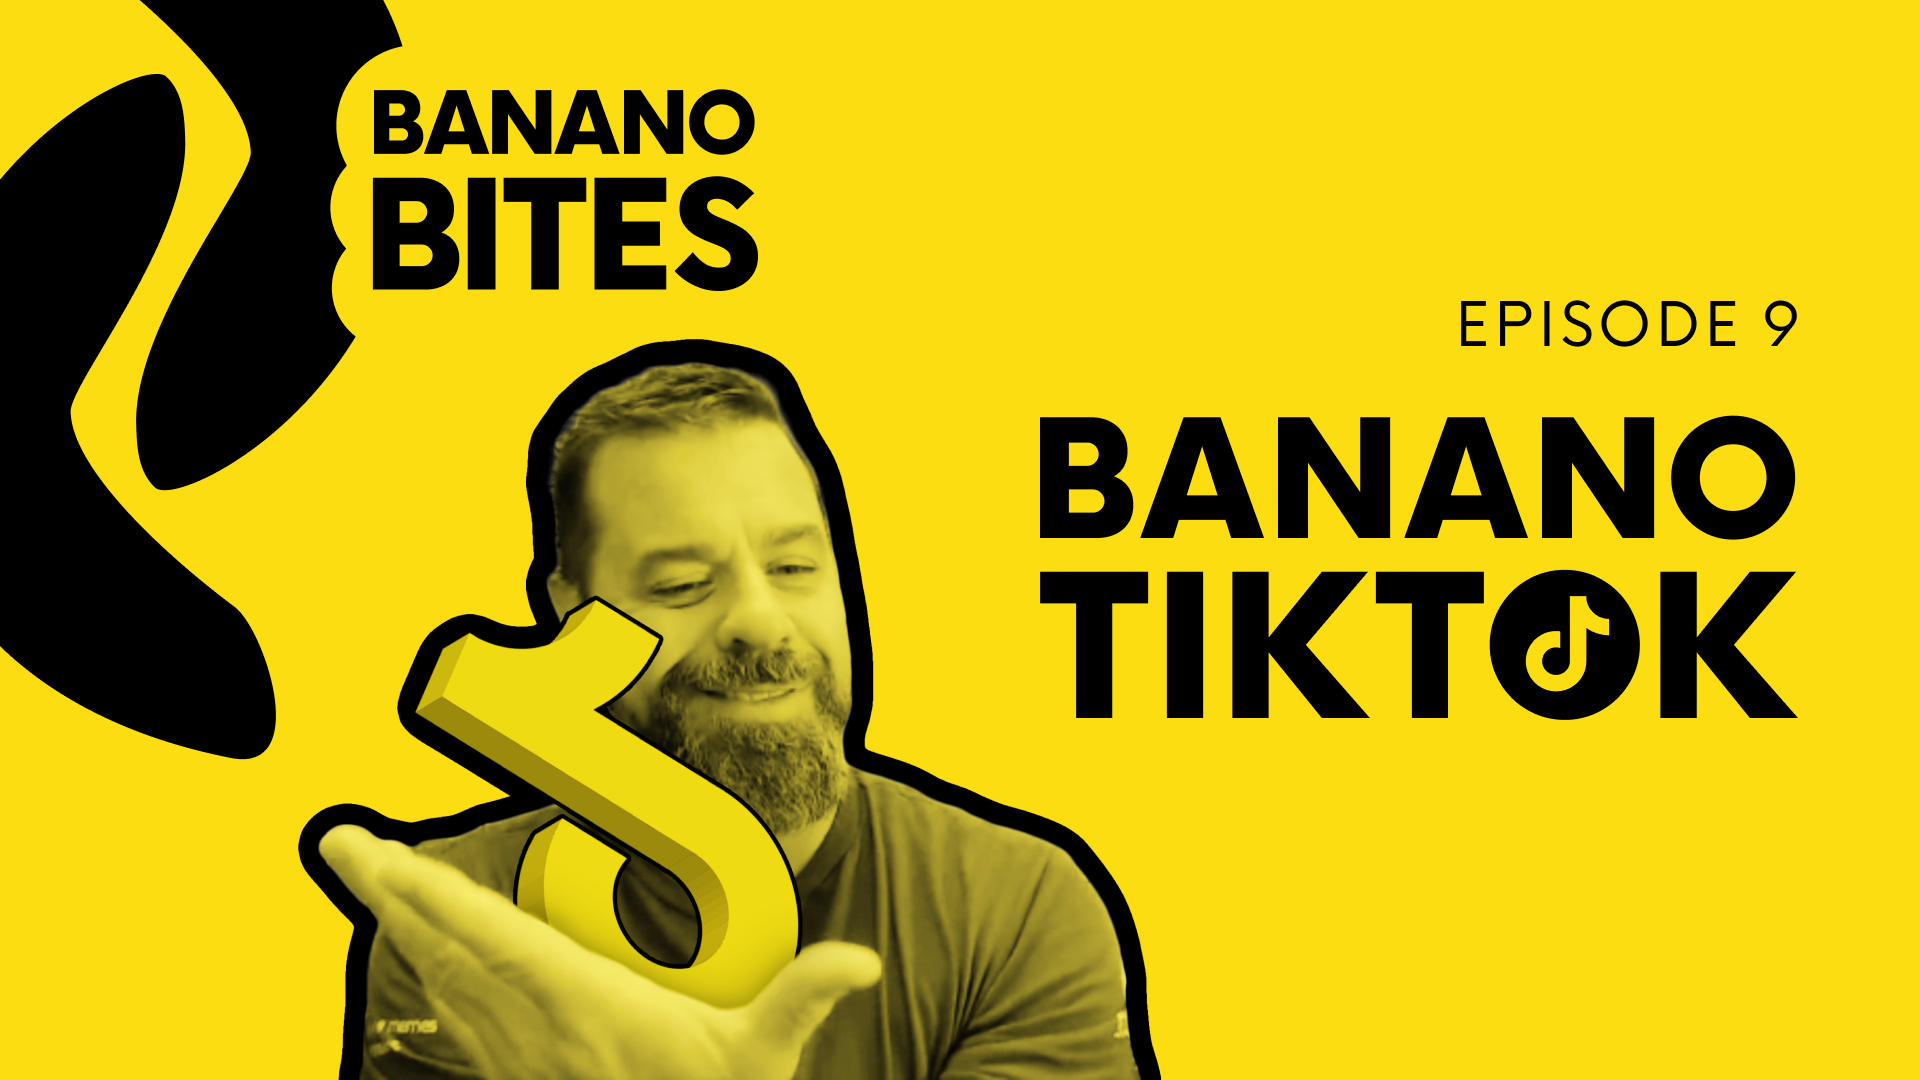 ‘Banano Bites’ Episode 9: BANANO Going Tiktok